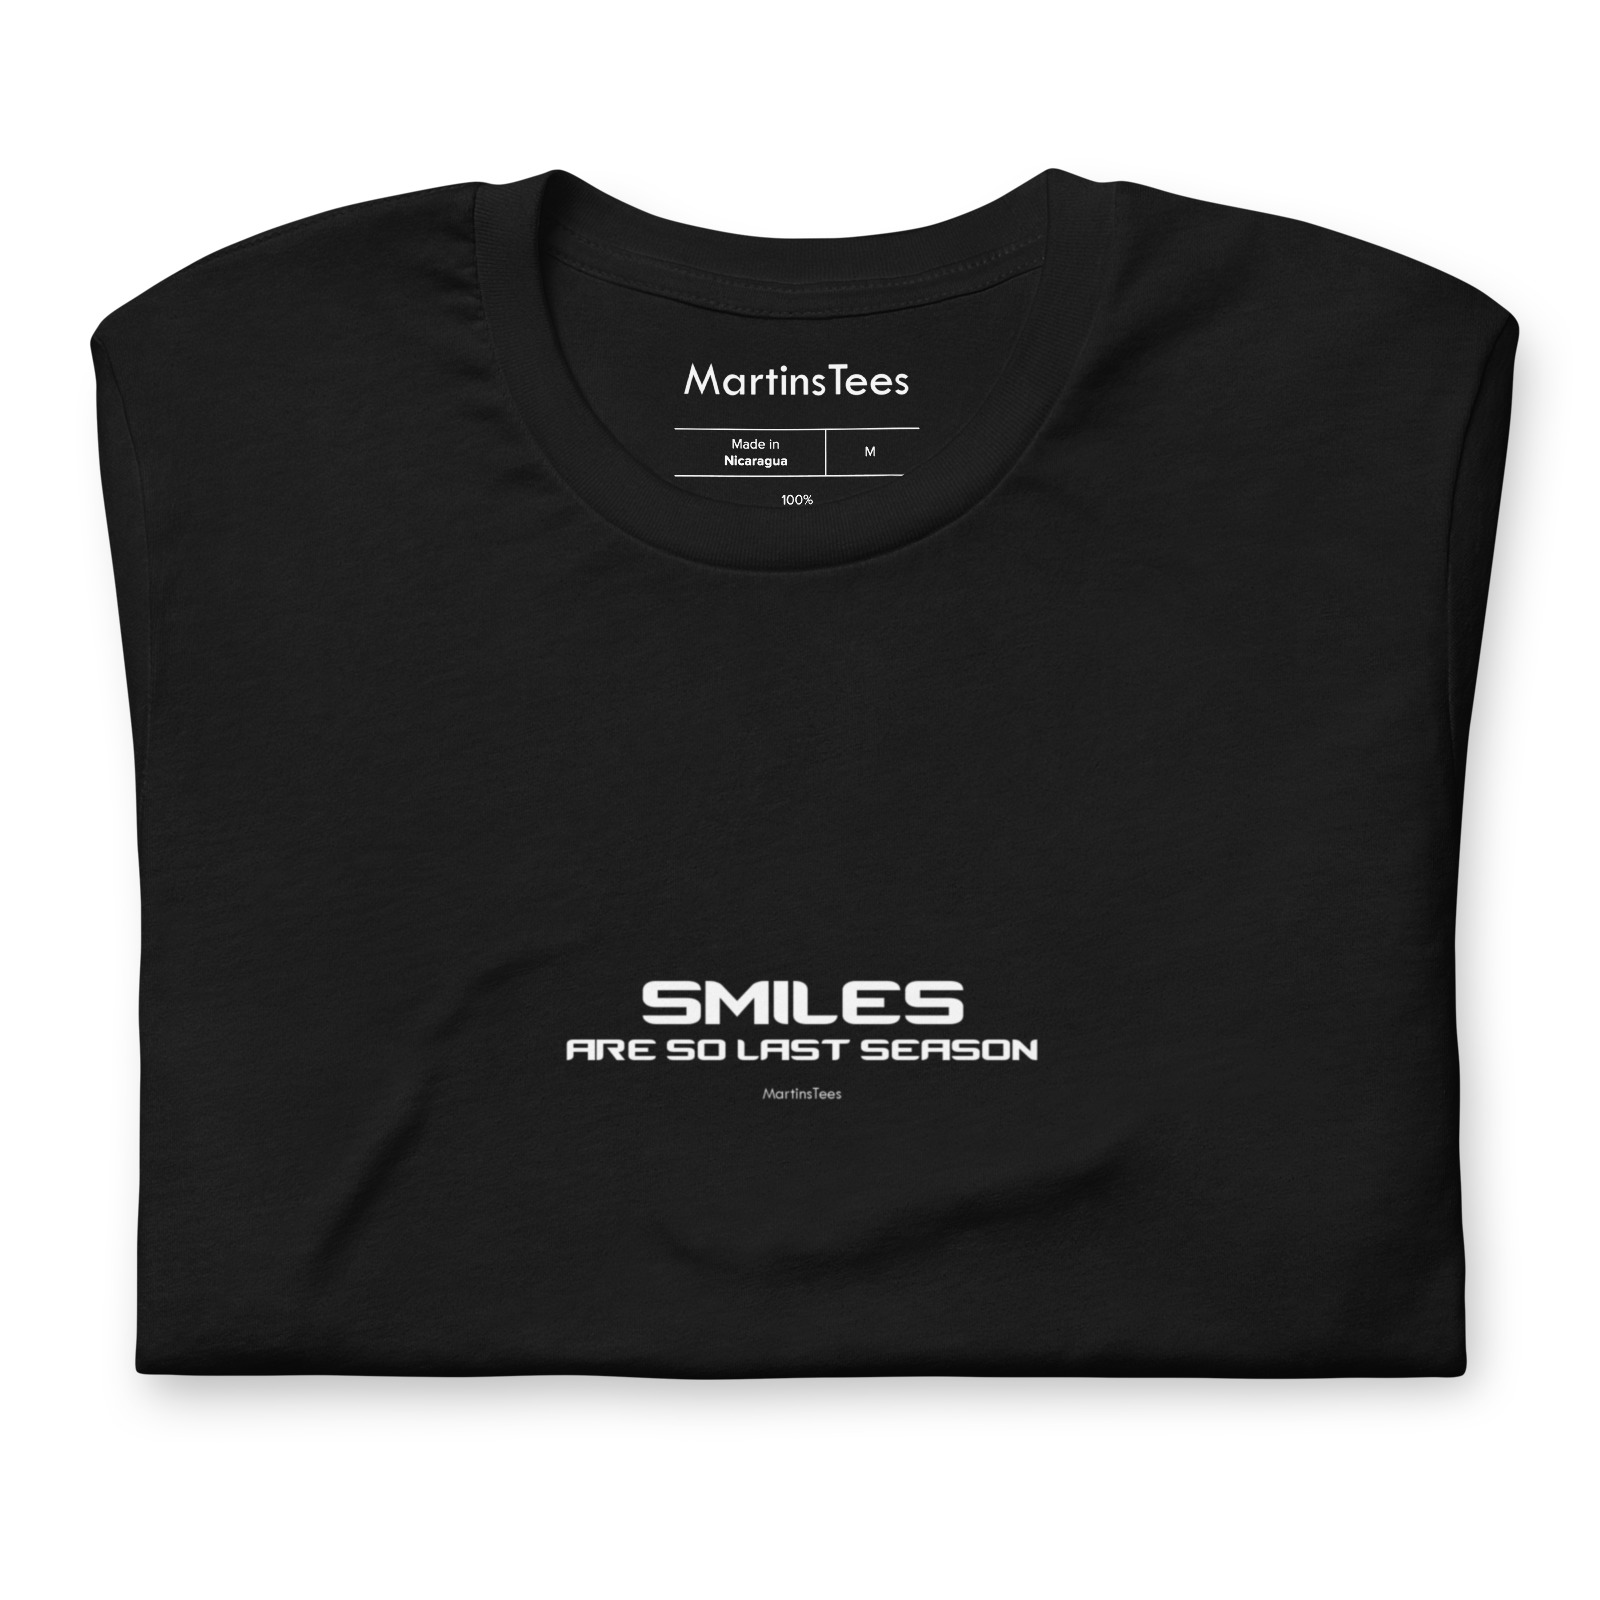 T-shirt: SMILES - ARE SO LAST SEASON